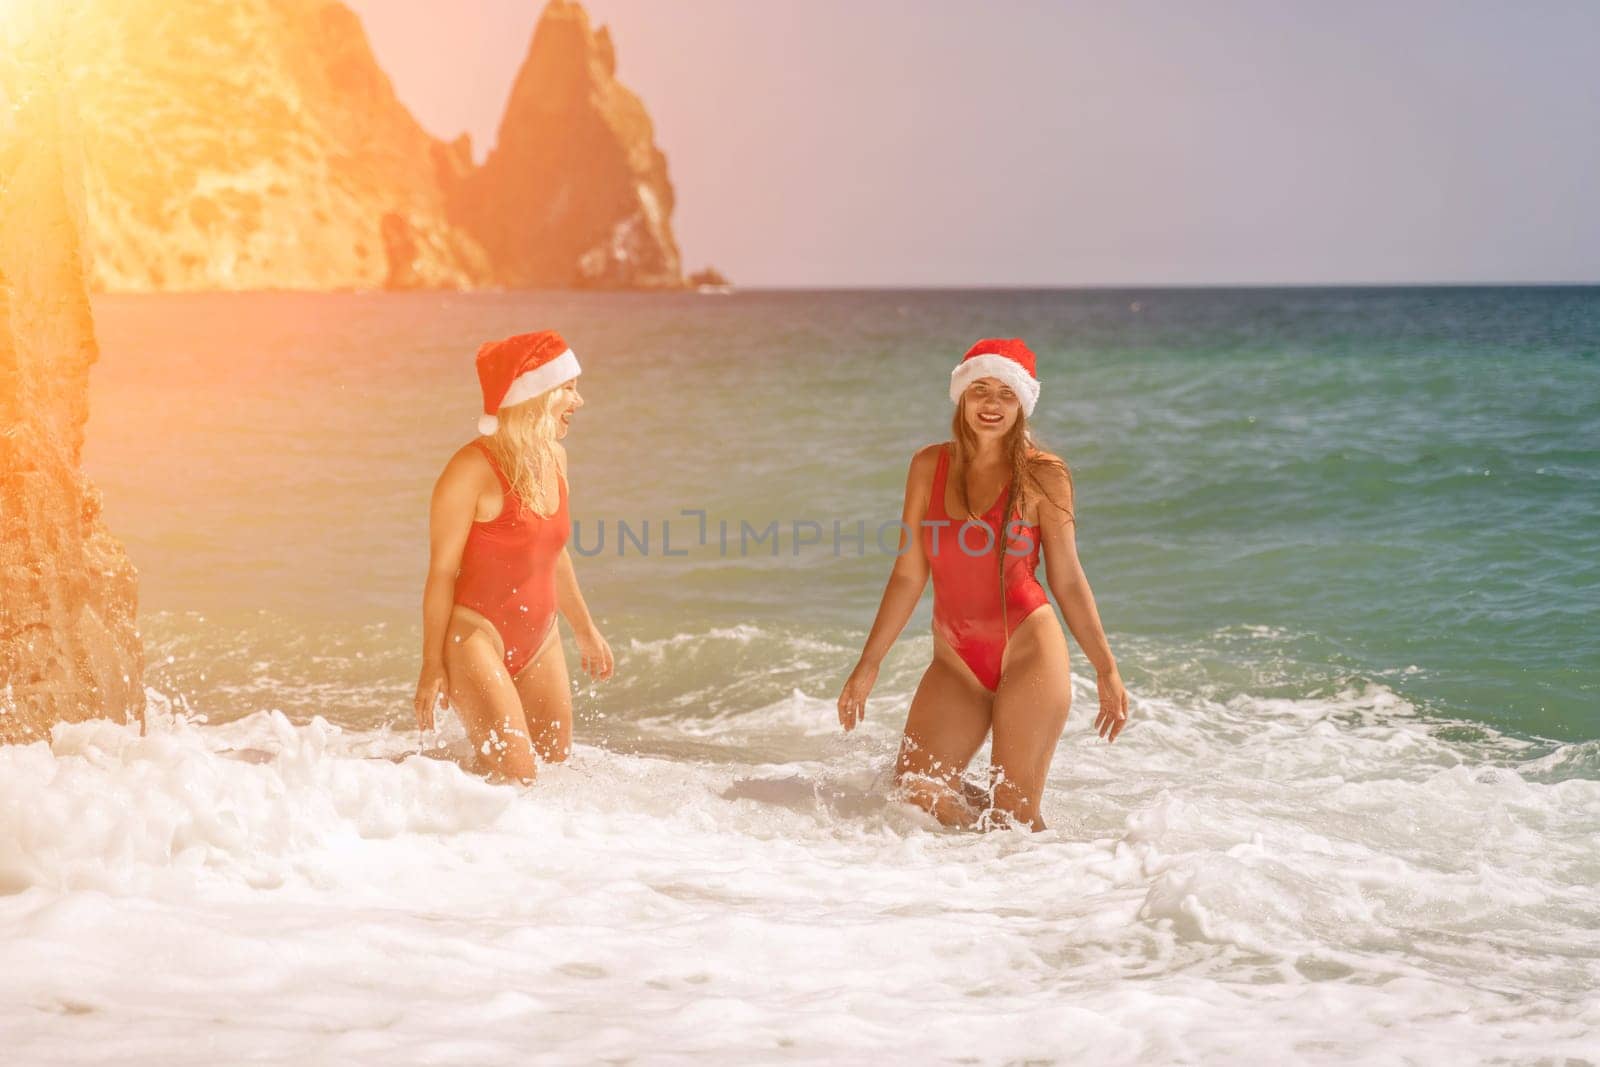 Women Santa hats ocean play. Seaside, beach daytime, enjoying beach fun. Two women in red swimsuits and Santa hats are enjoying themselves in the ocean waves